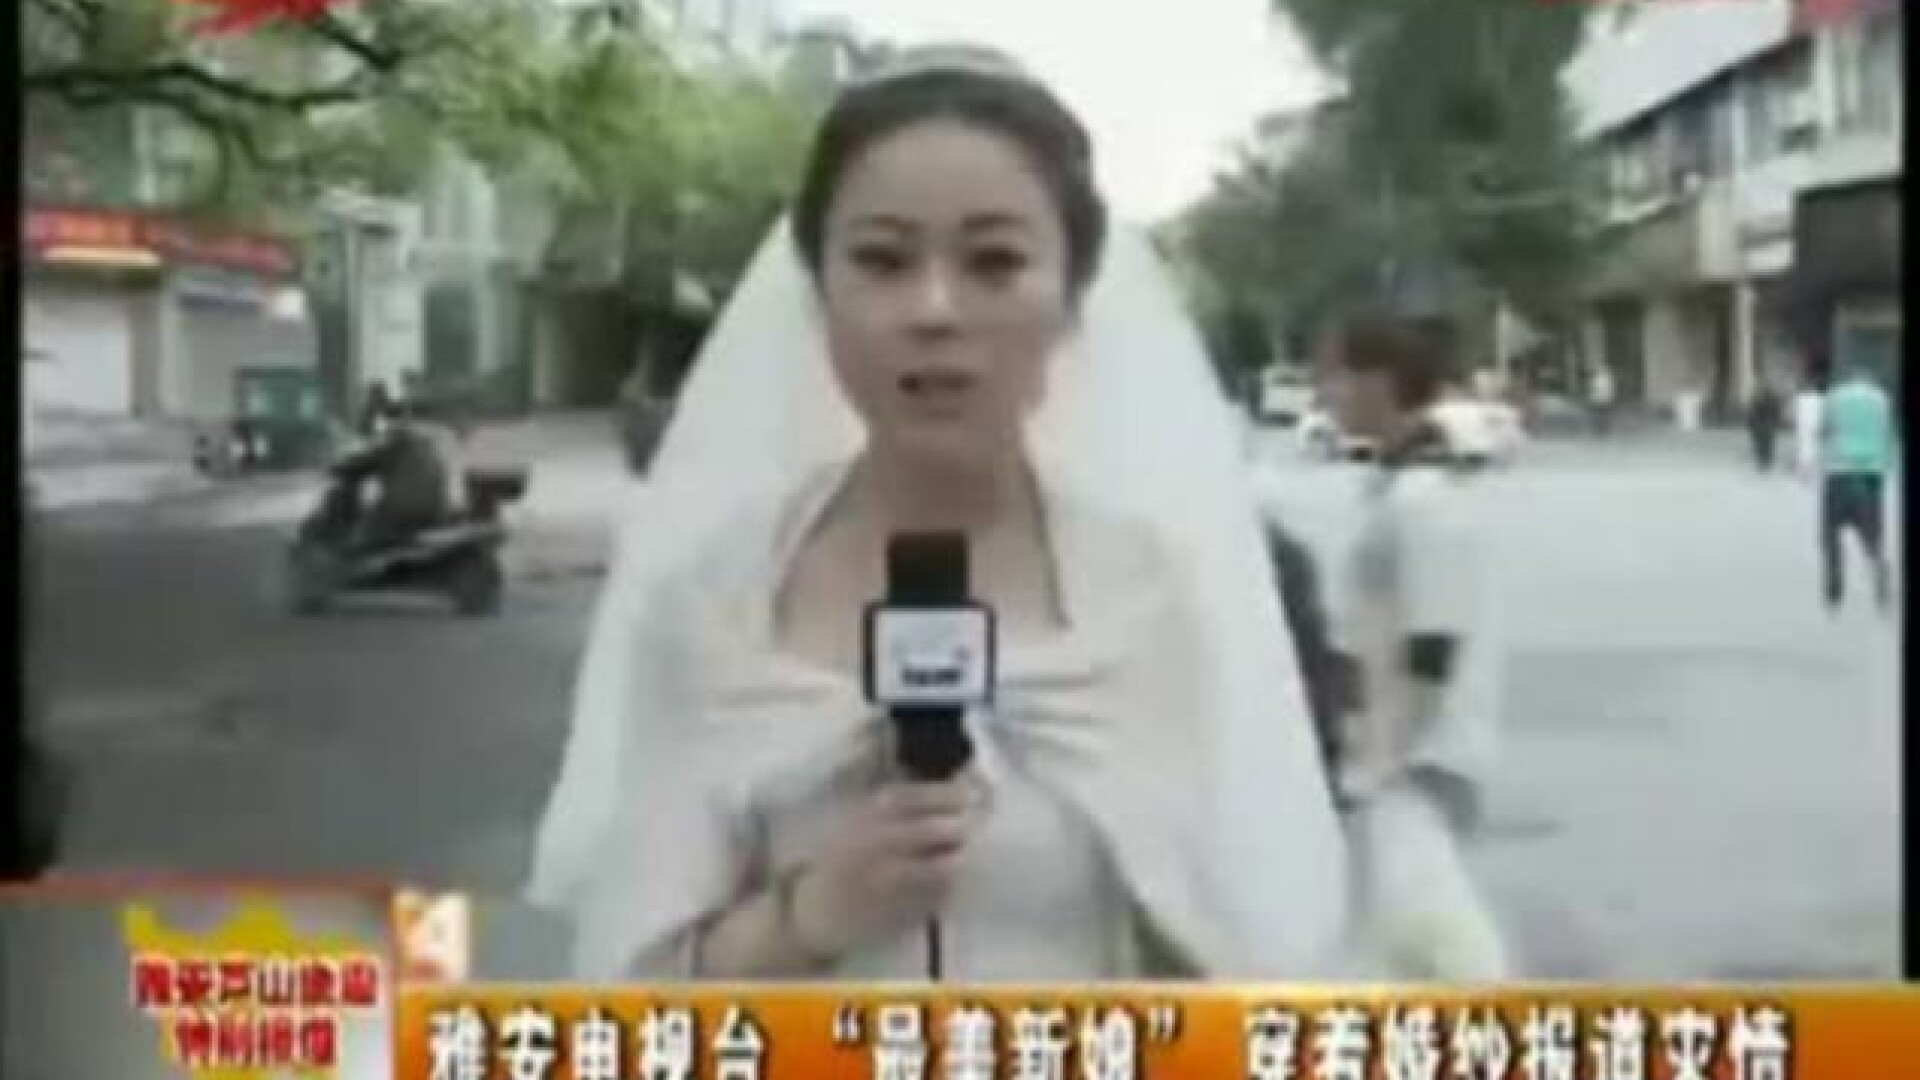 China, mireasa relateaza despre cutremur